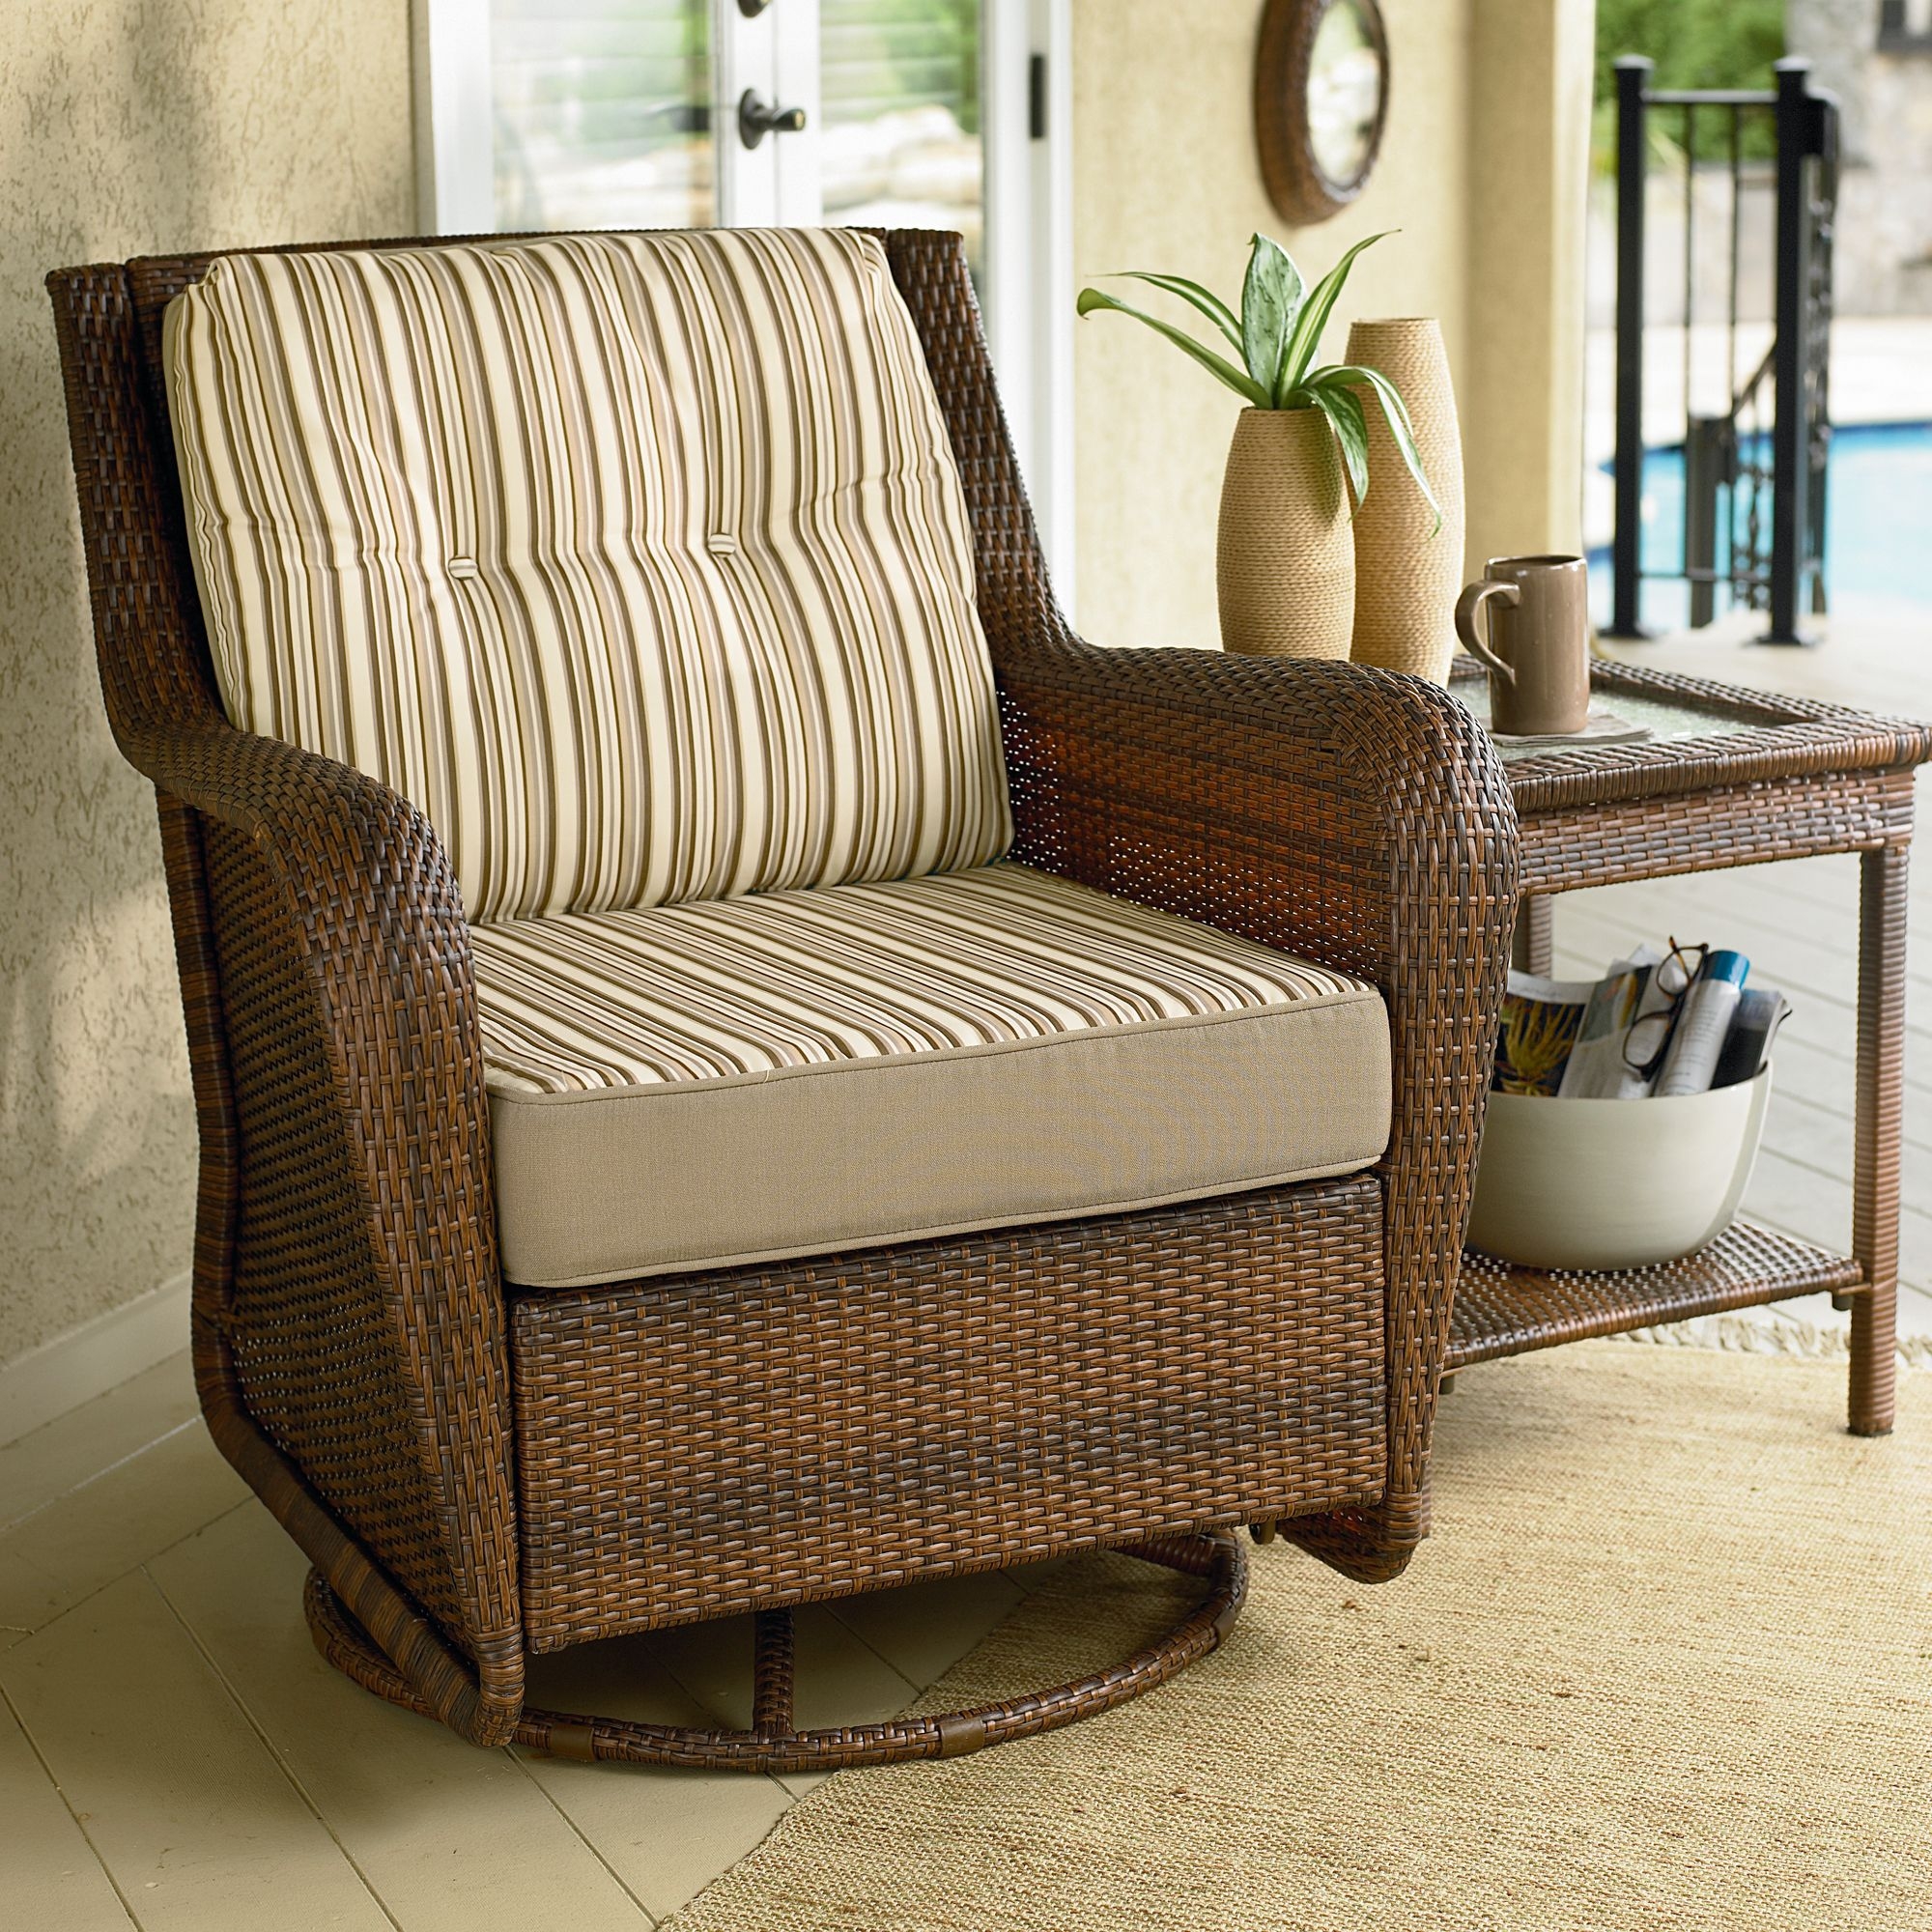 Ty pennington patio furniture mayfield swivel glider chair photo